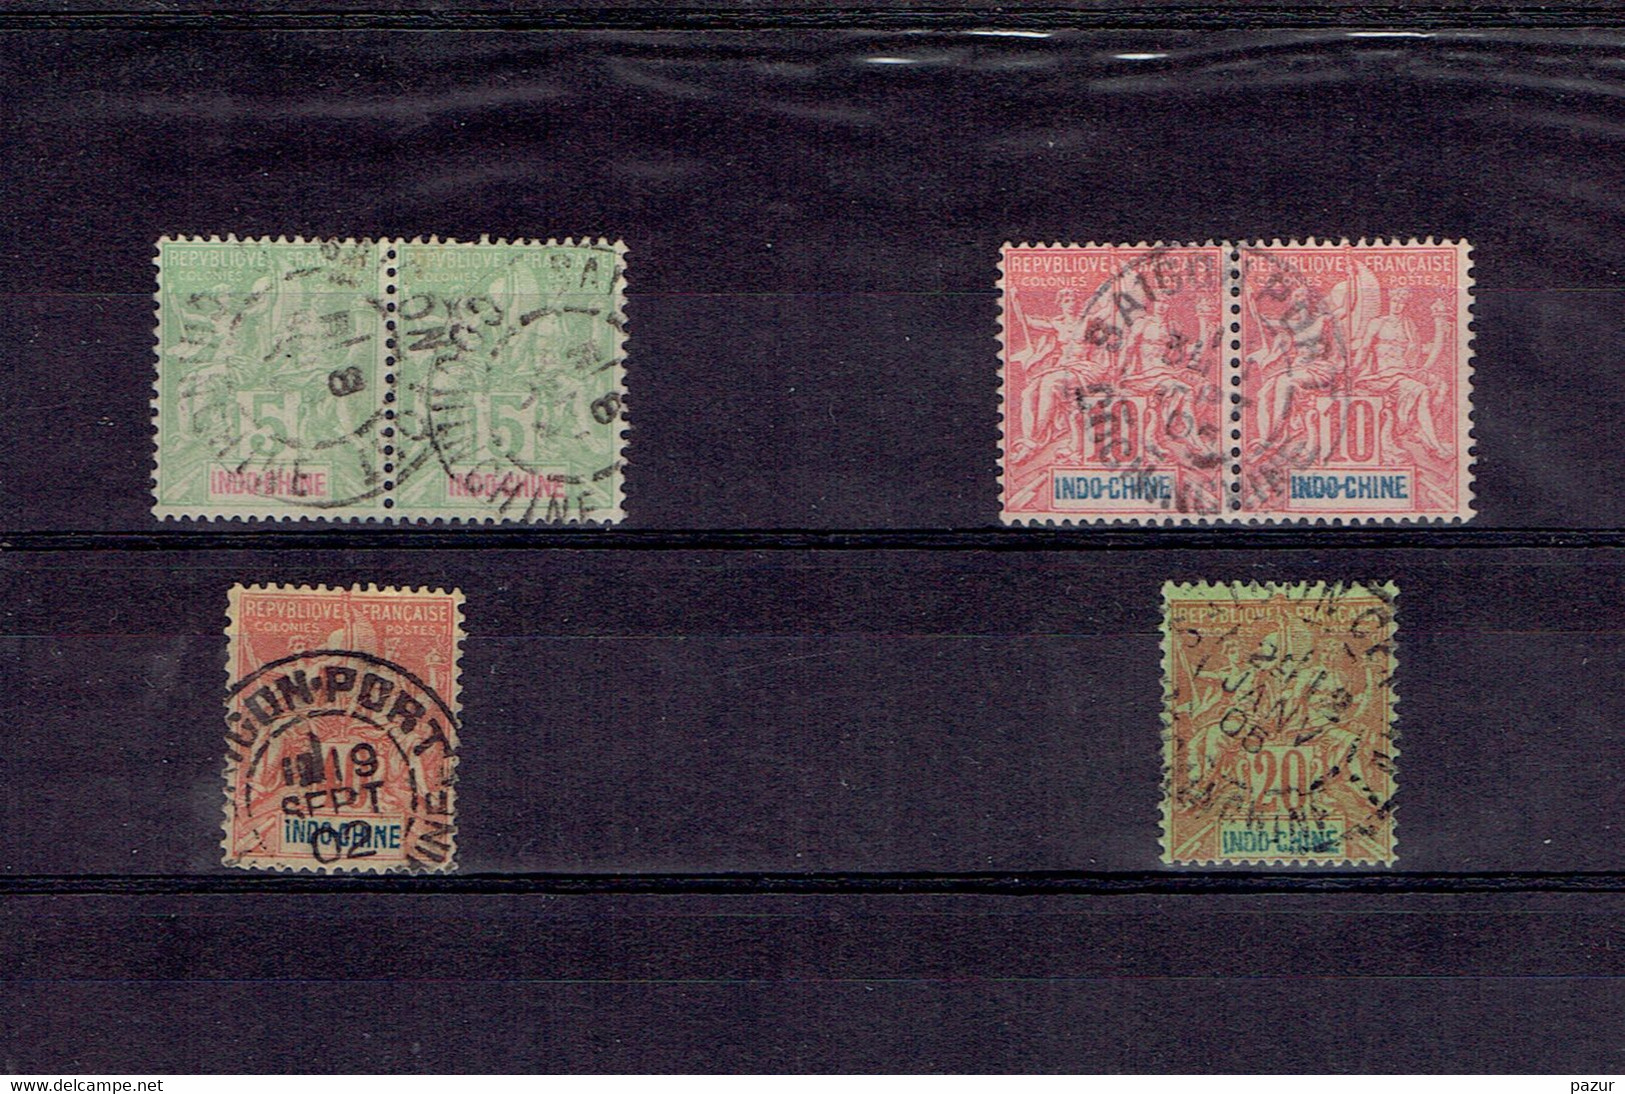 COCHINCHINE - TP INDOCHINE N°17 PAIRE - 18 PAIRE +1 OB SAIGON PORT - N°9 OB SAIGON CENTRALE - COCHINCHINE 1900 - Used Stamps